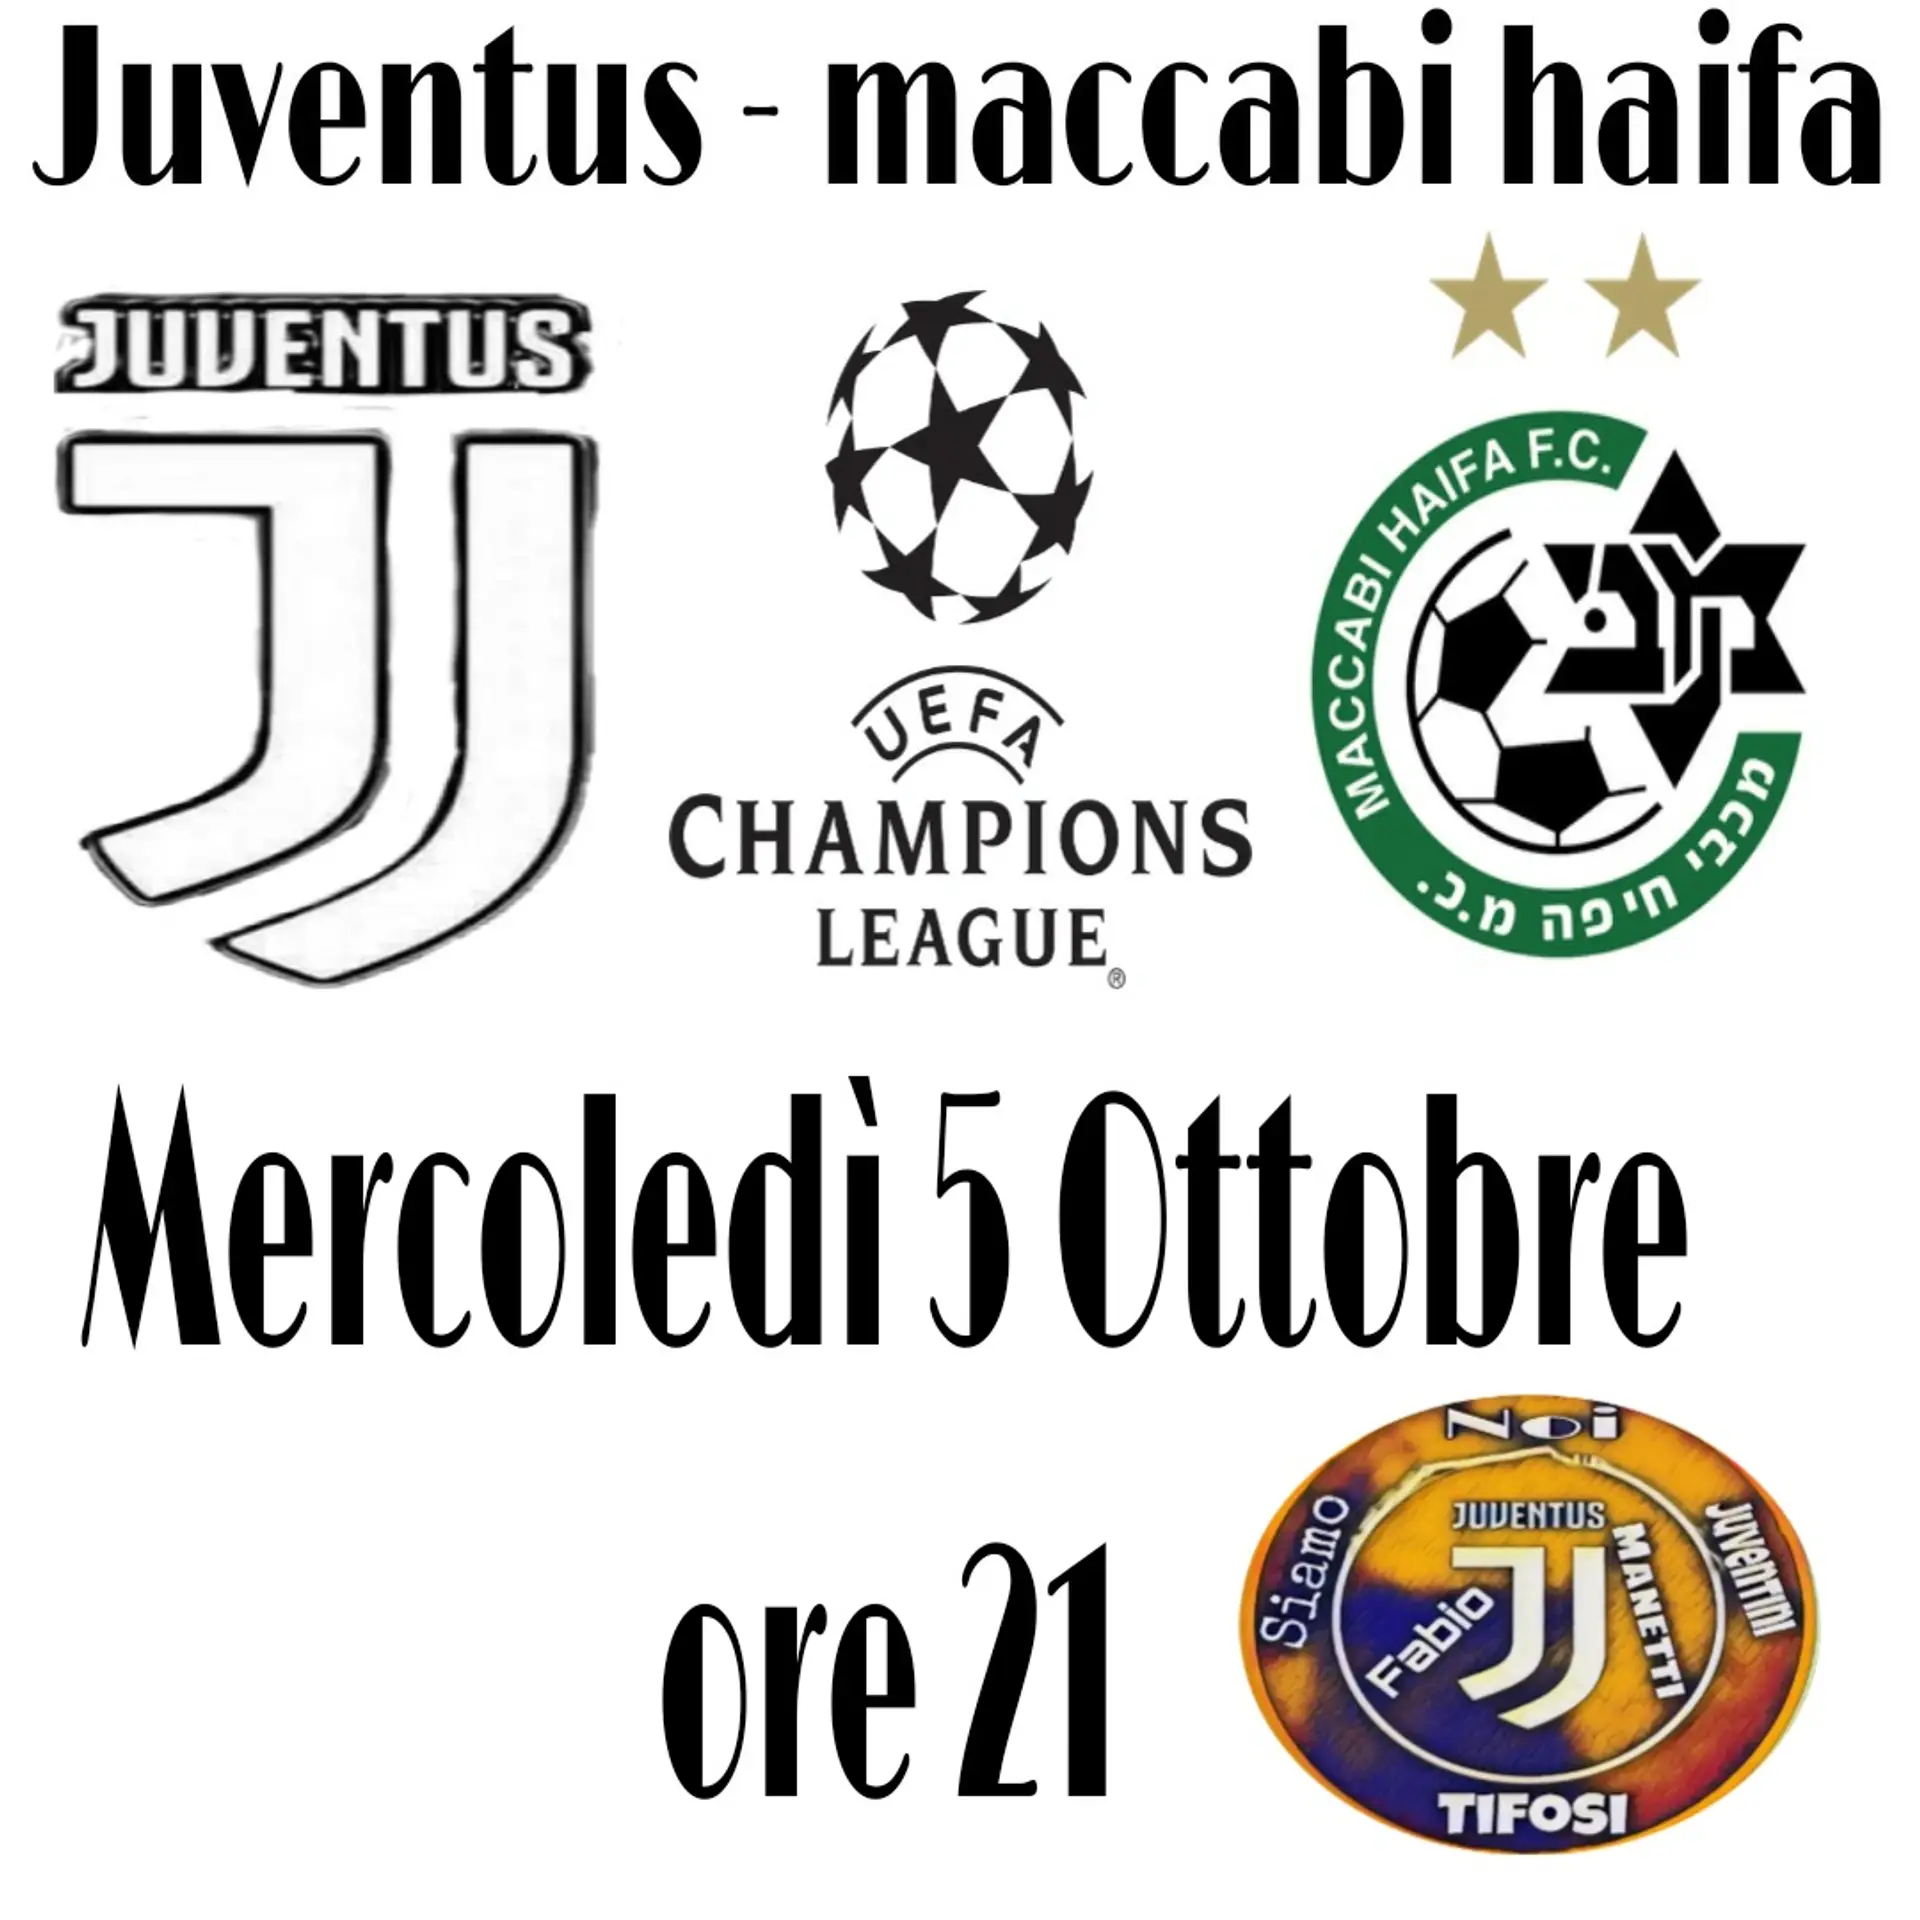 Juventus - maccabi haifa Mercoledì 5 Ottobre ore 21 